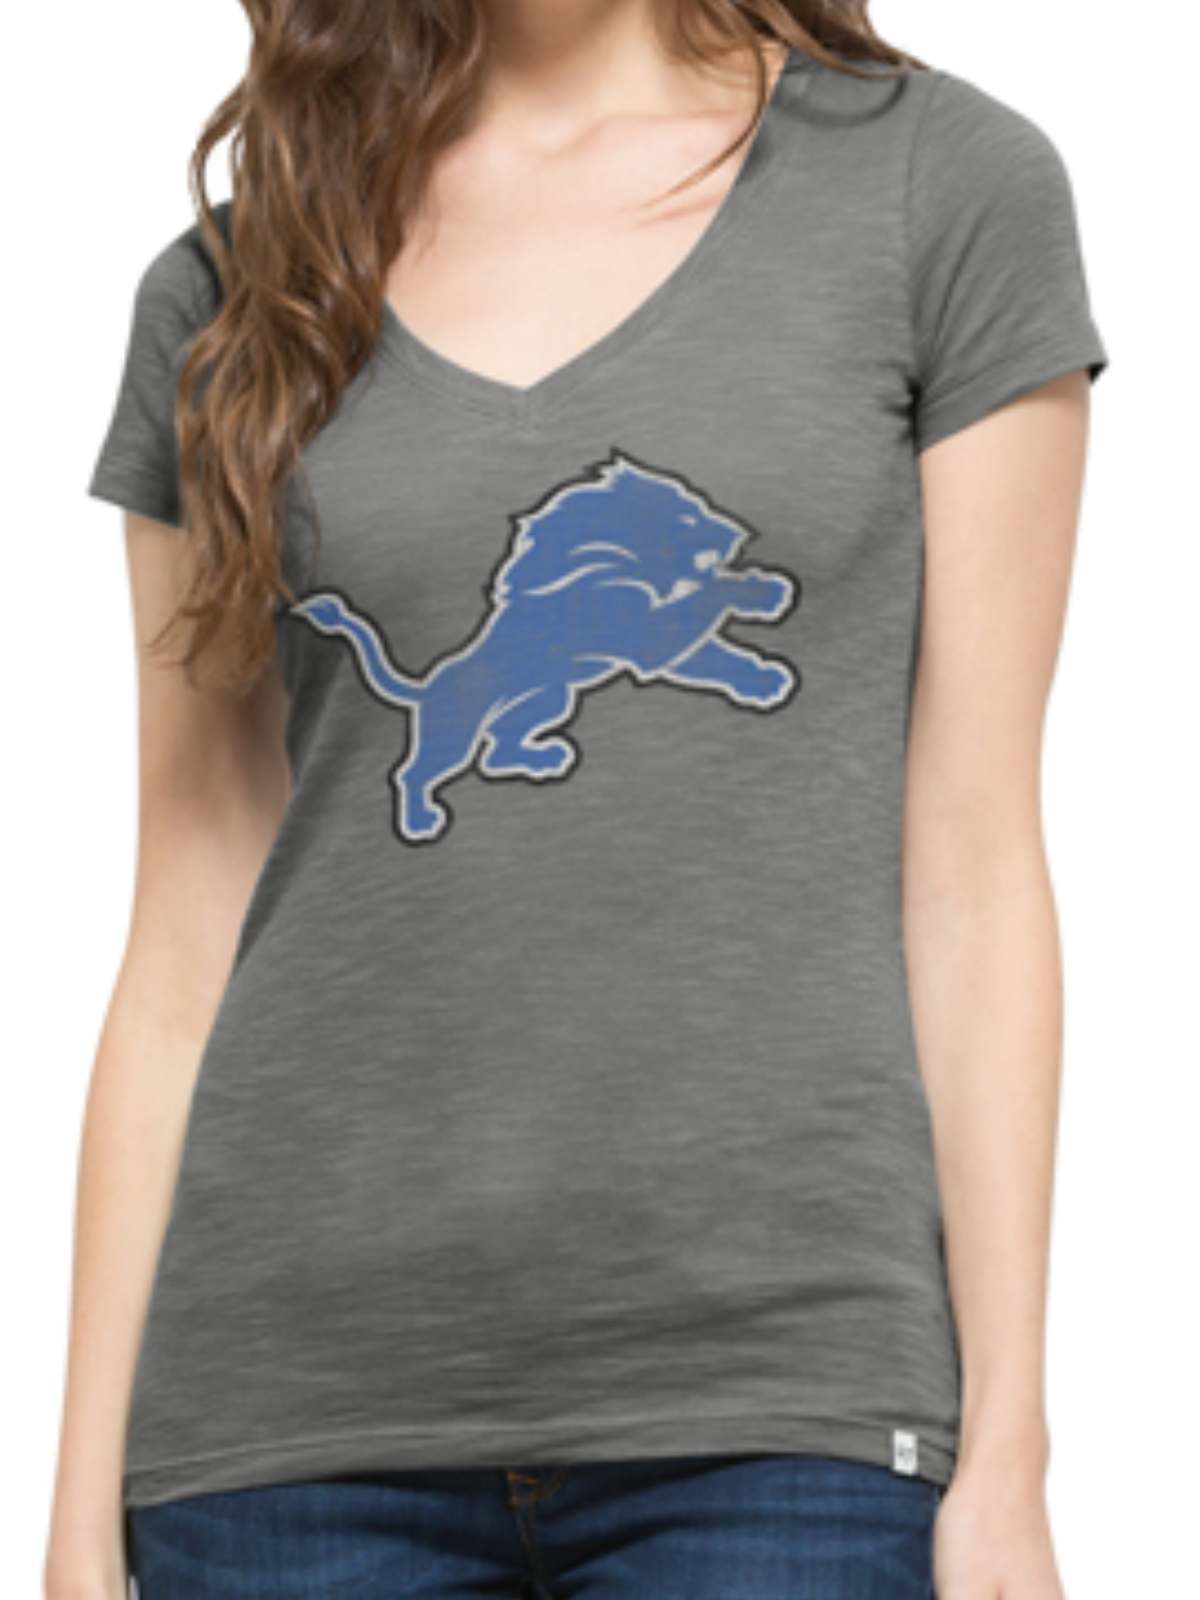 Houston Astros Women's Small V-Neck T-Shirt, Blue, Postseason